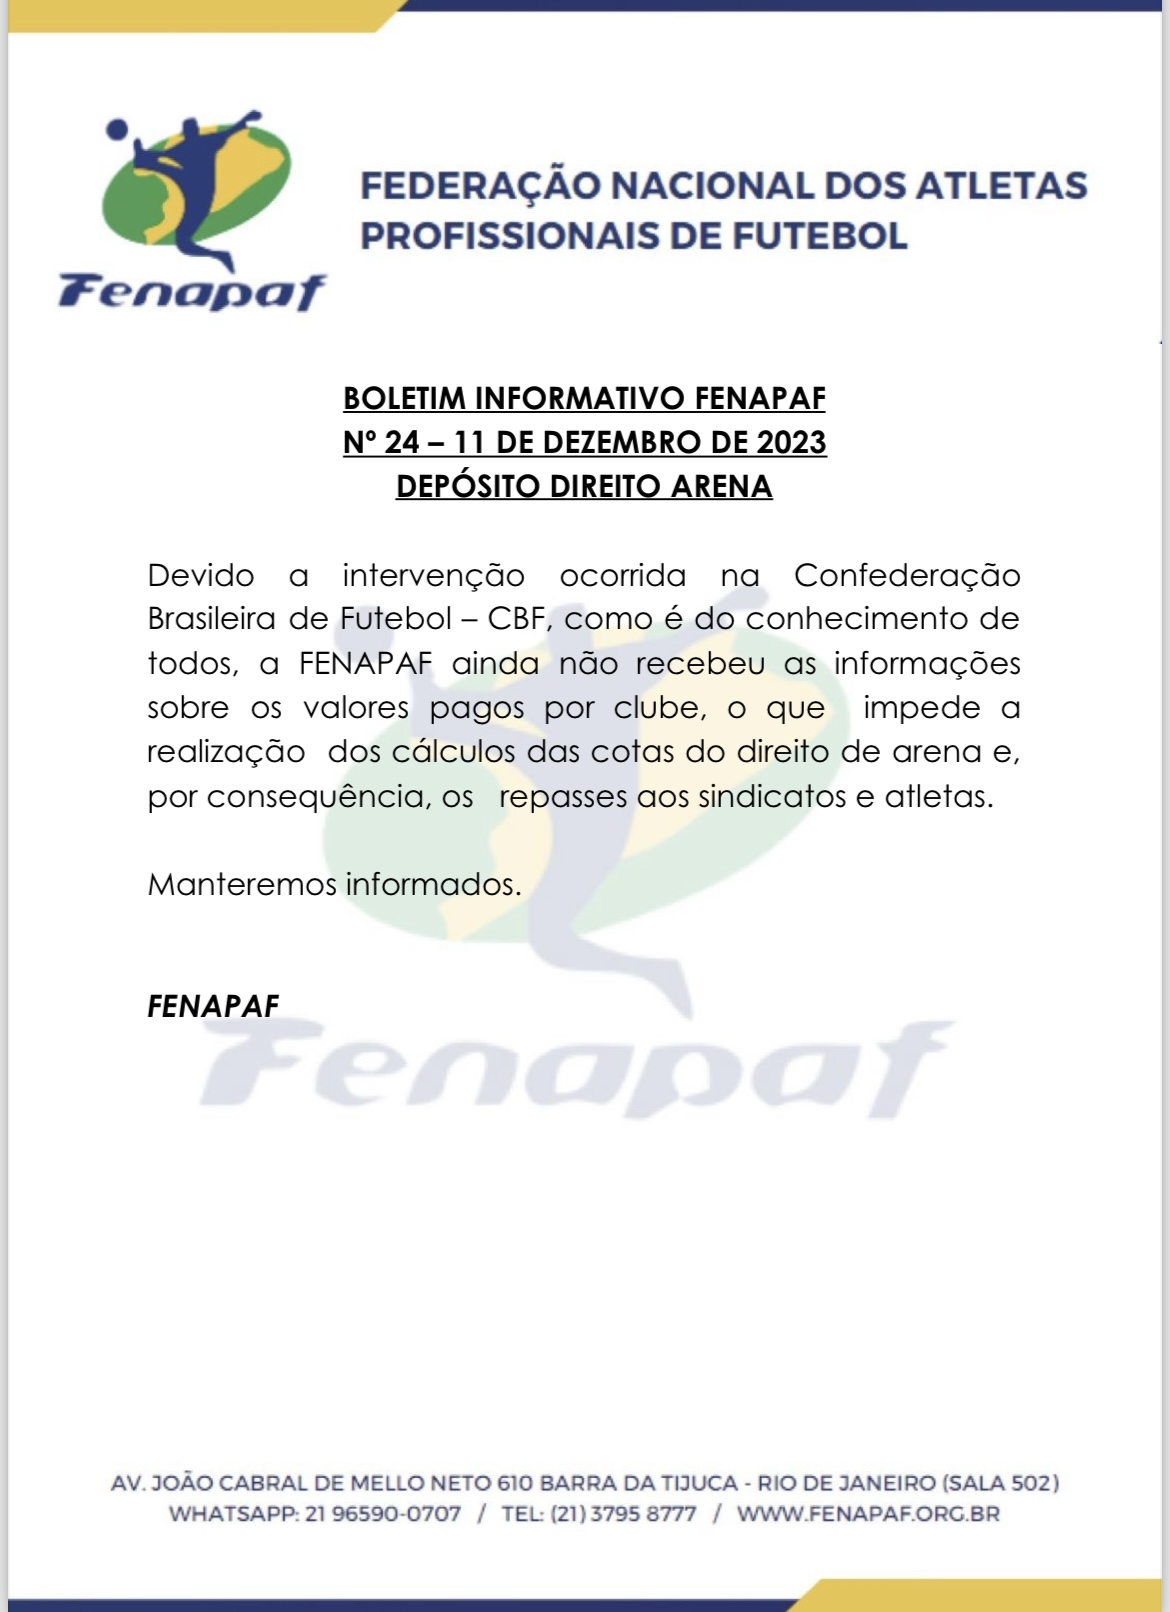 FPF, Sindicato dos Atletas e Portal Futebol Interior promovem